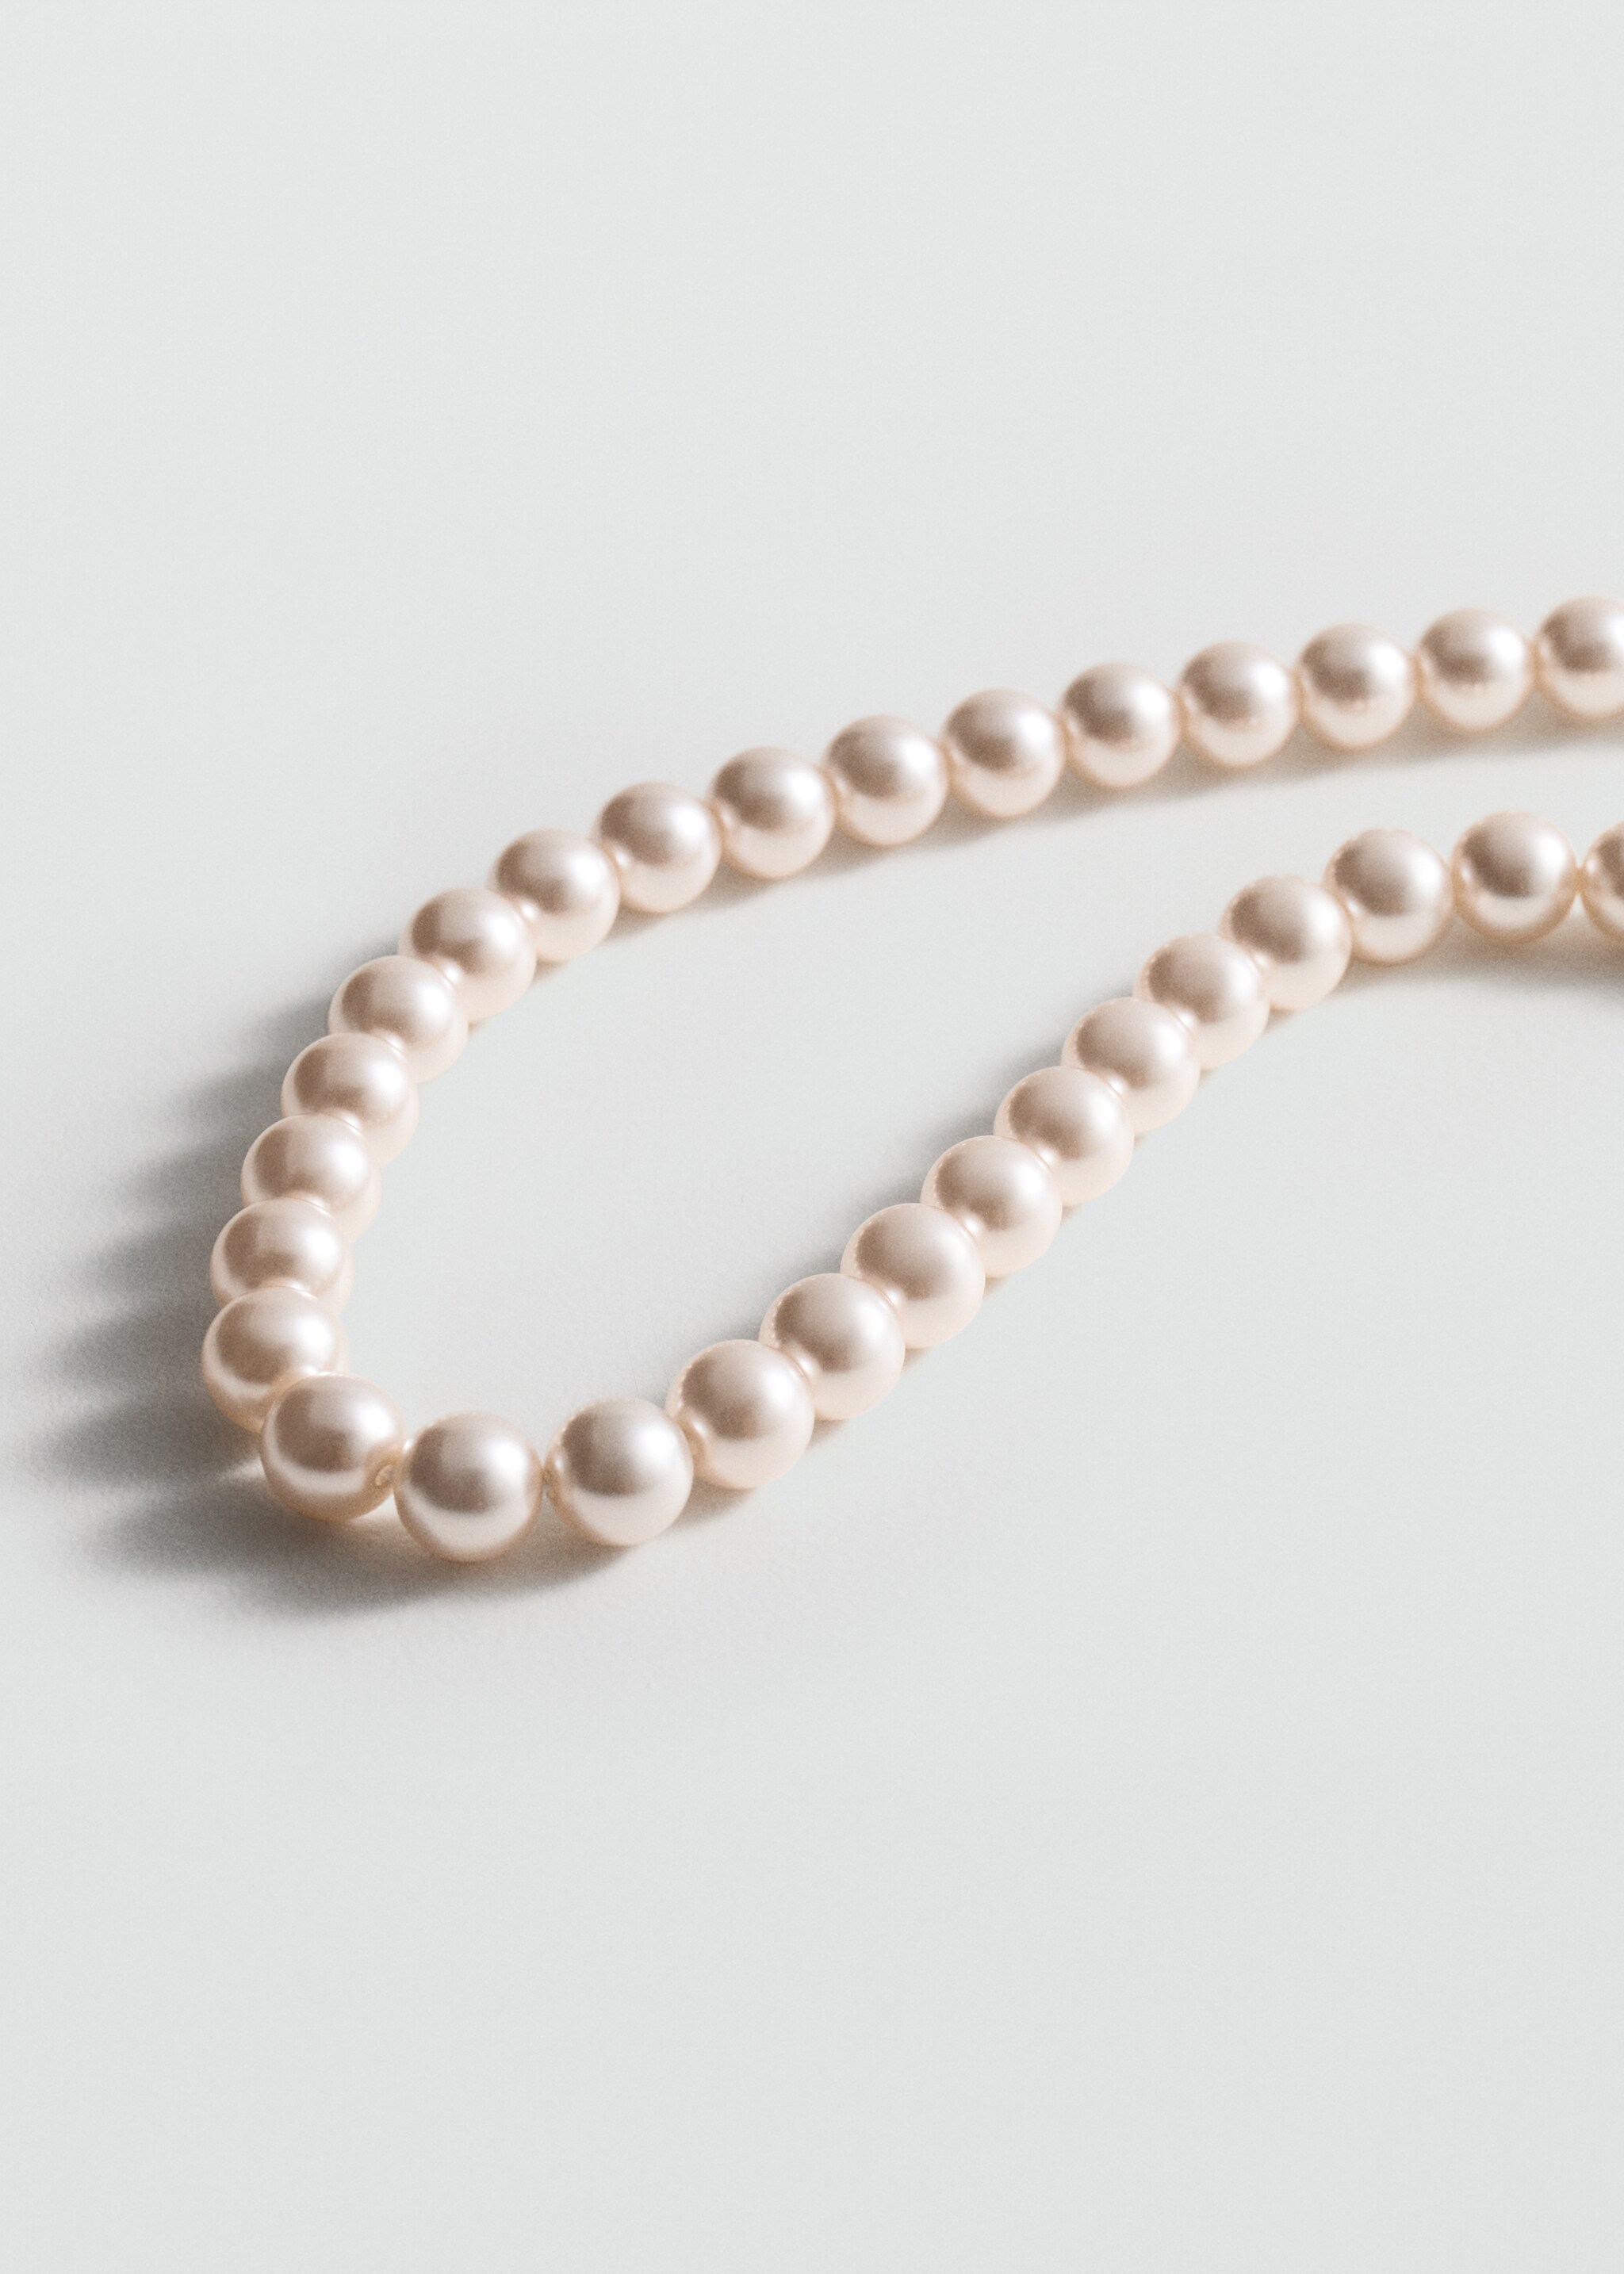 Pearl necklace - Medium plane